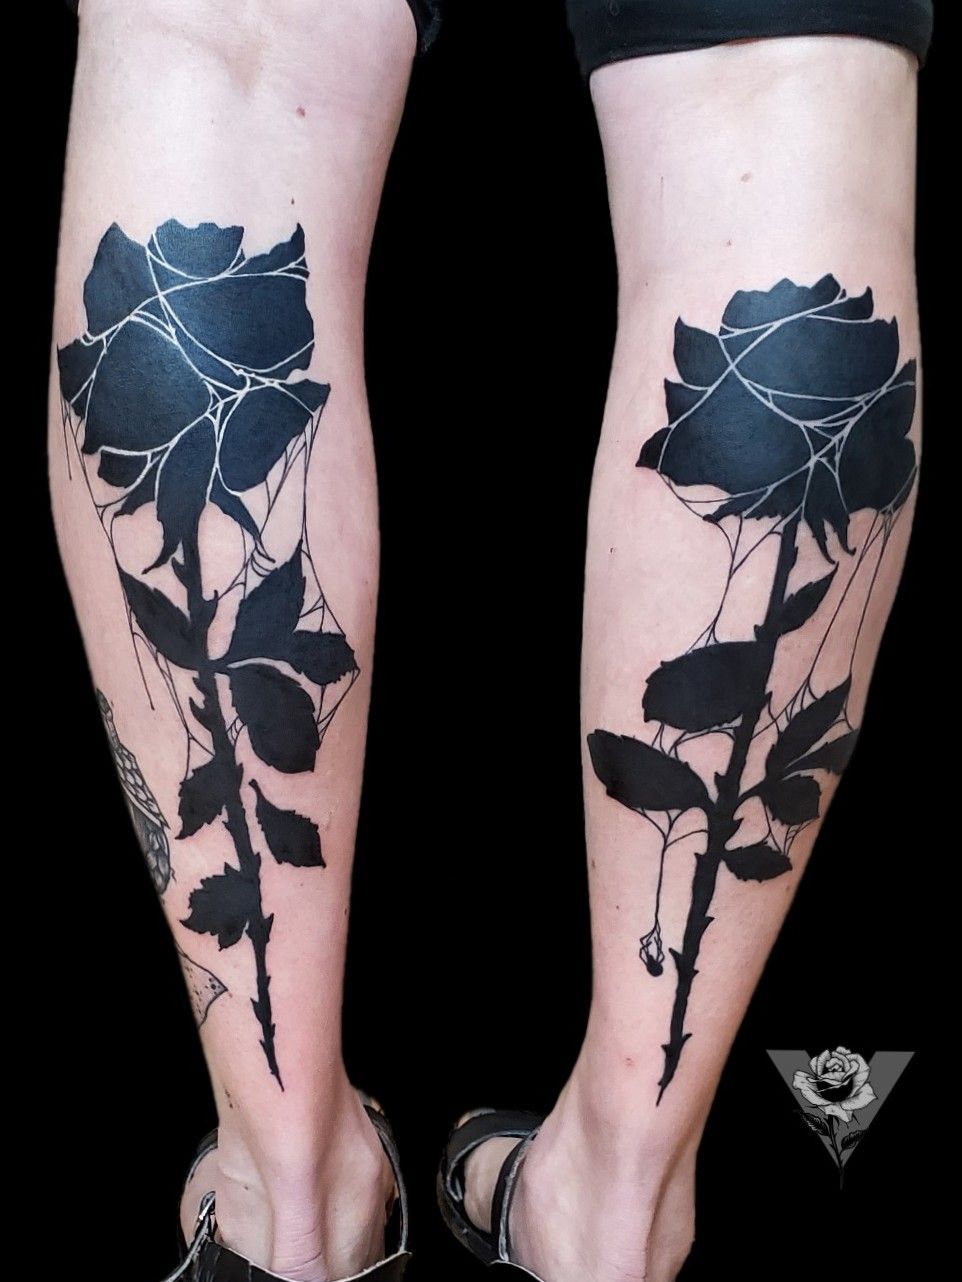 Floral wrist piece By Marky Hladish at Dark Heart Tattoo Crystal Lake IL   rtattoos